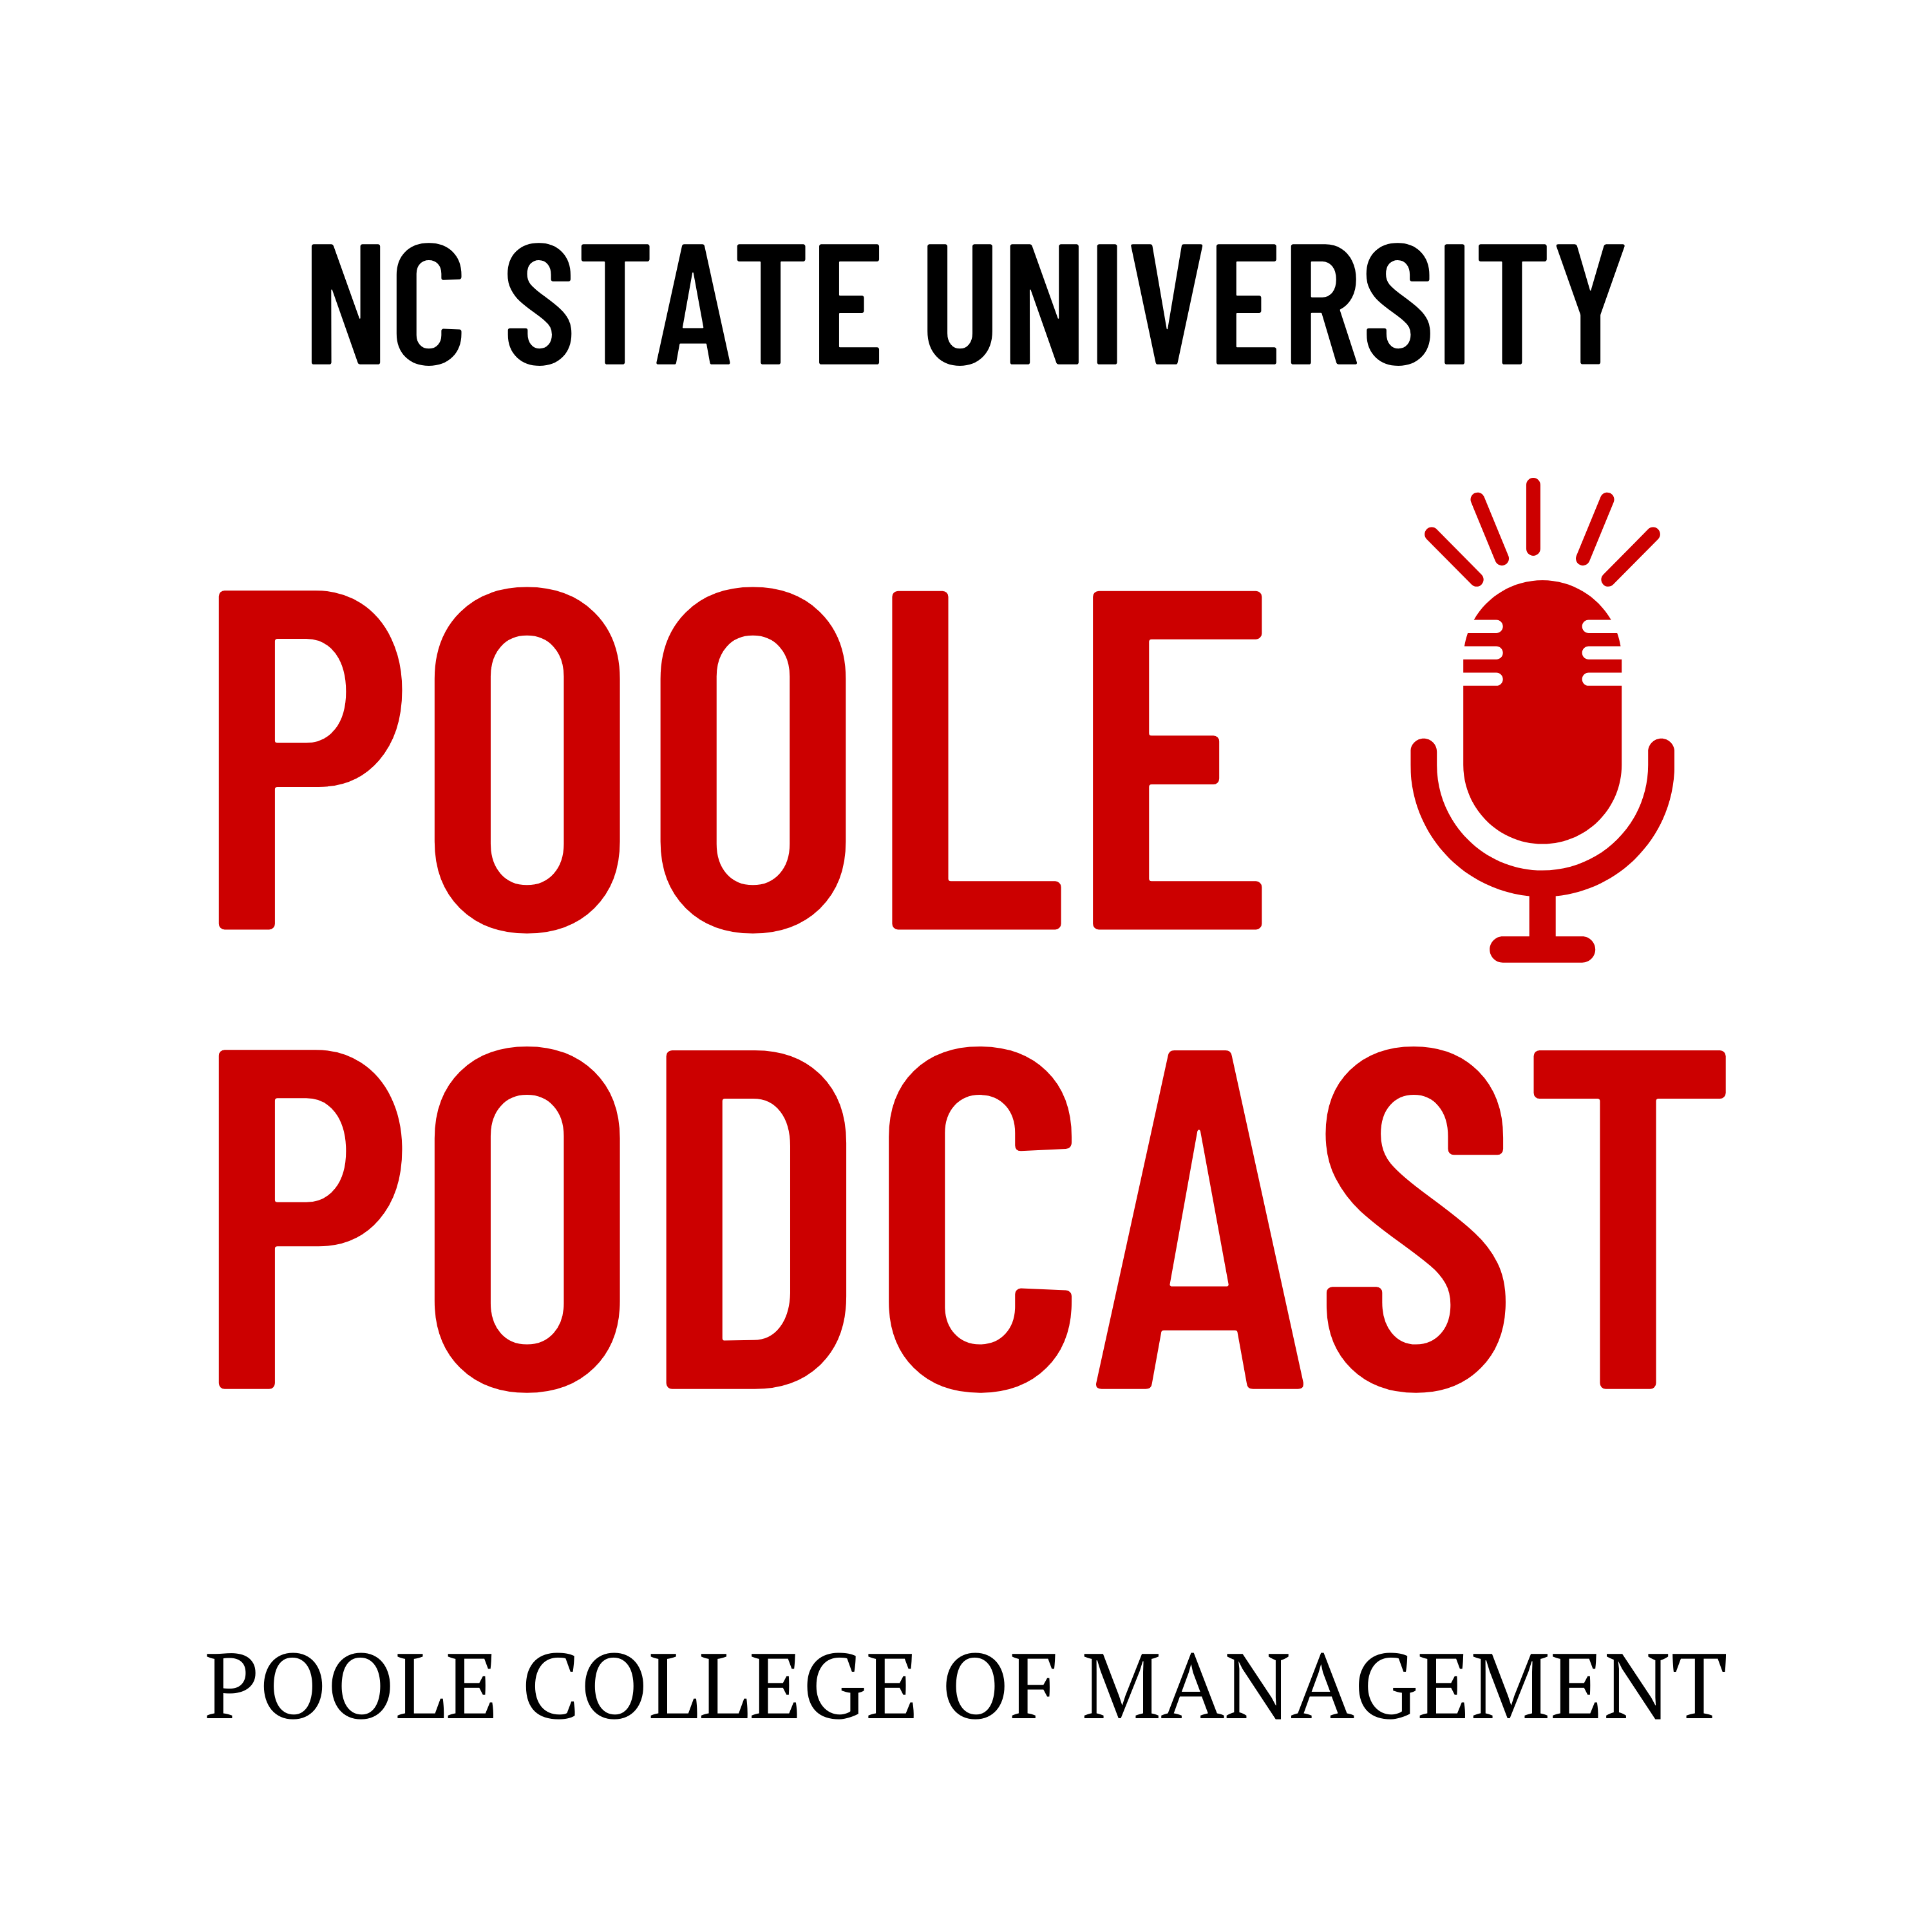 Poole Podcast Image